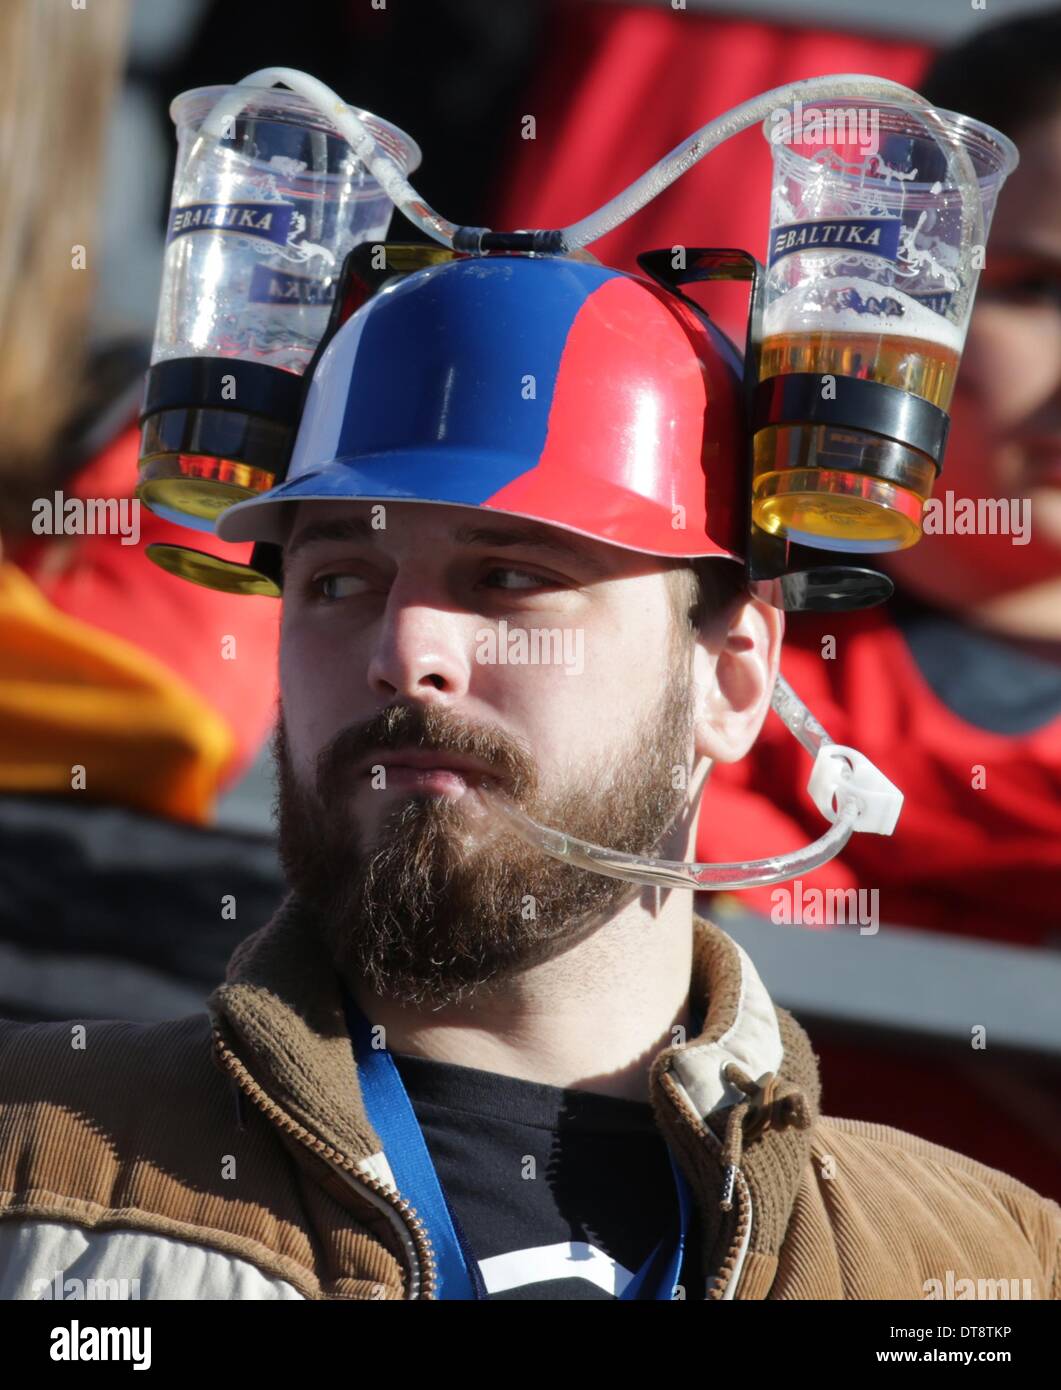 Sochi, Russia. 12th February 2014. A Spectator wears a drinking